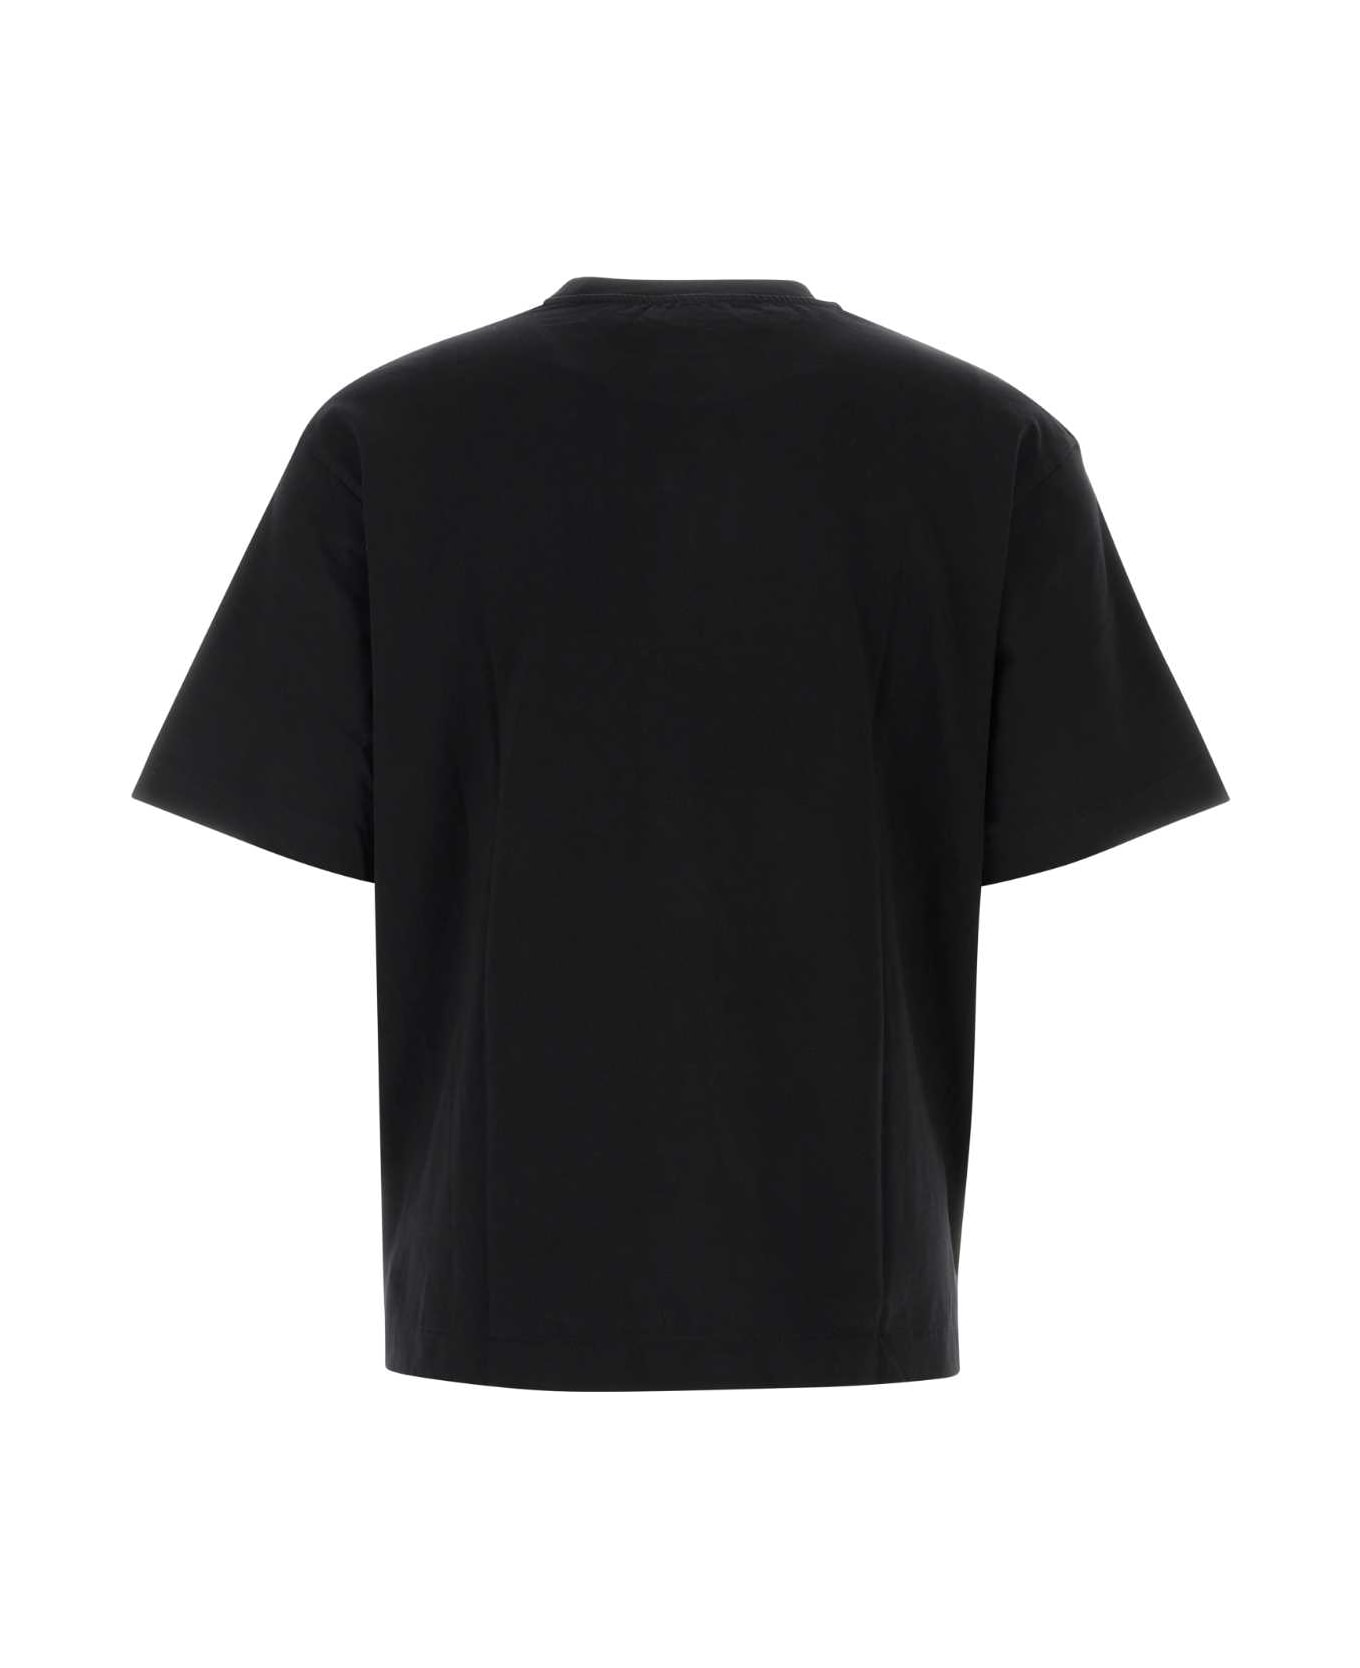 Off-White Black Cotton Oversize T-shirt - 1001